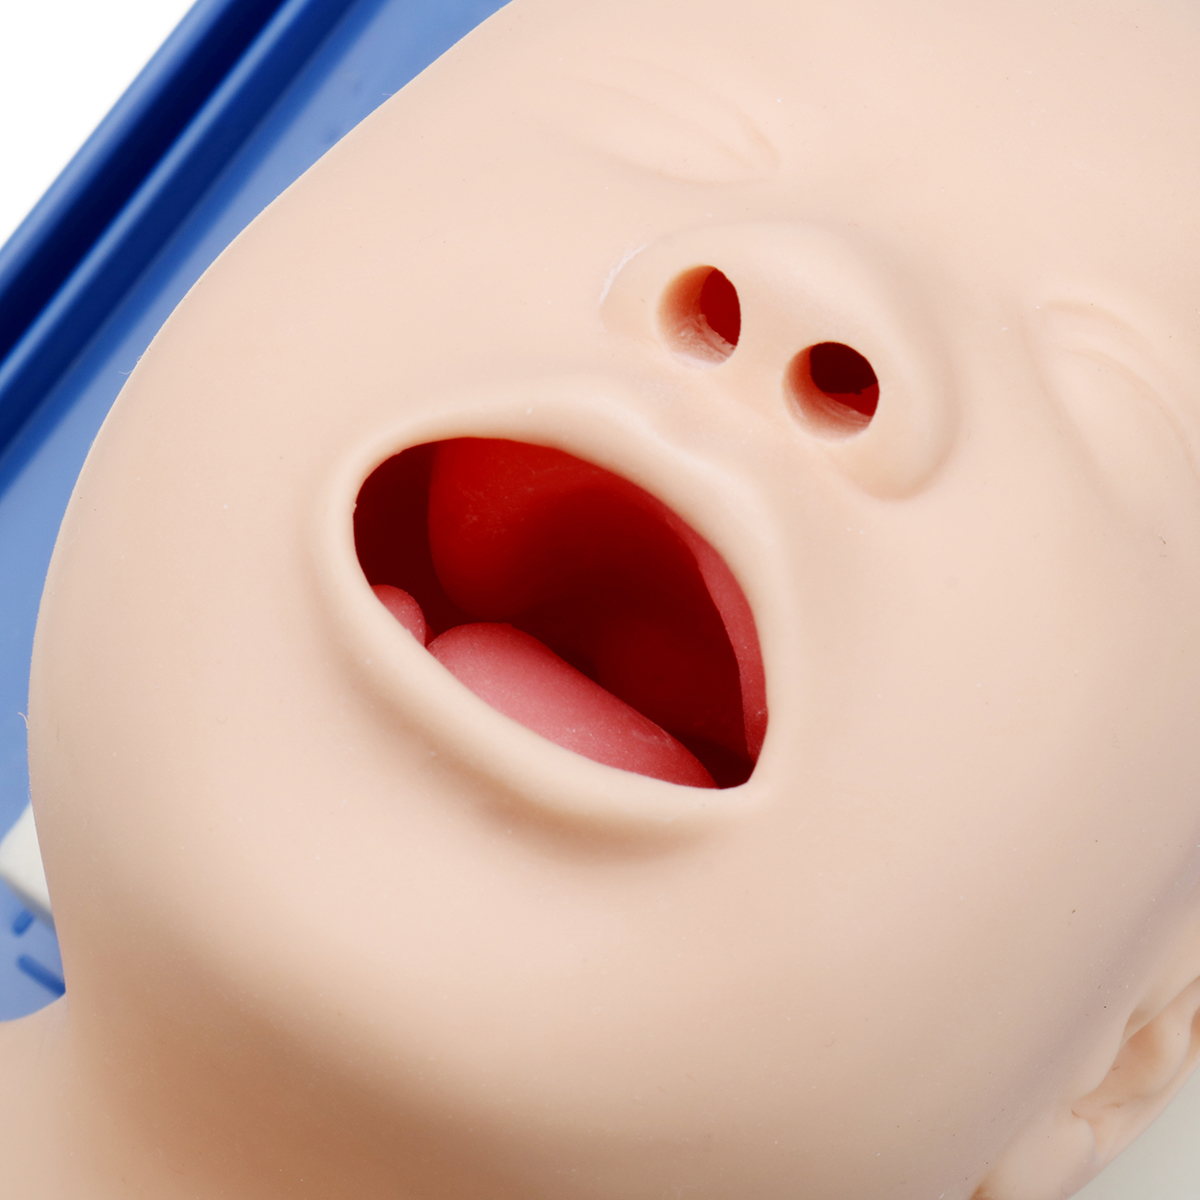 Intubation Manikin Study Teaching Model Baby Infant Airway Management Trainer Medical Model 18